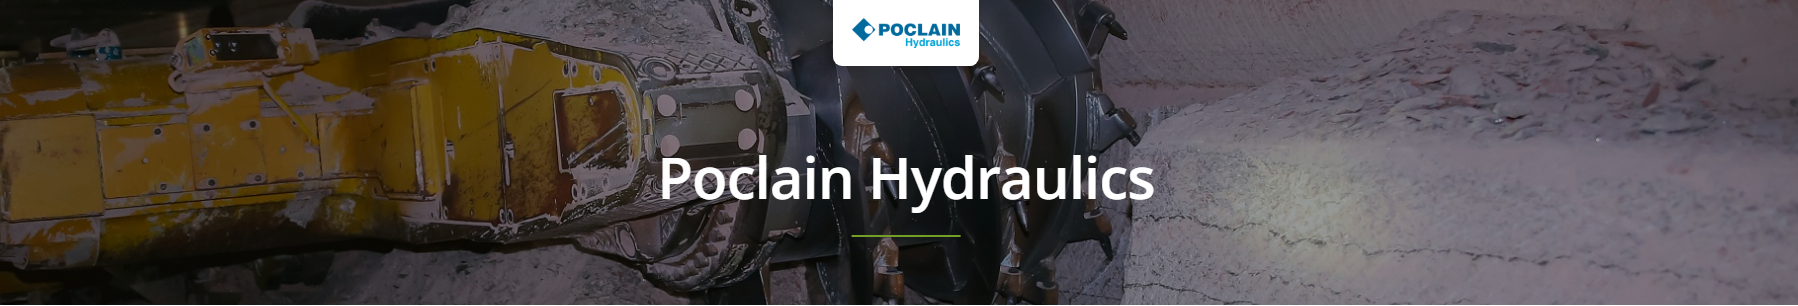 Poclain Hydraulics Electronics and Components